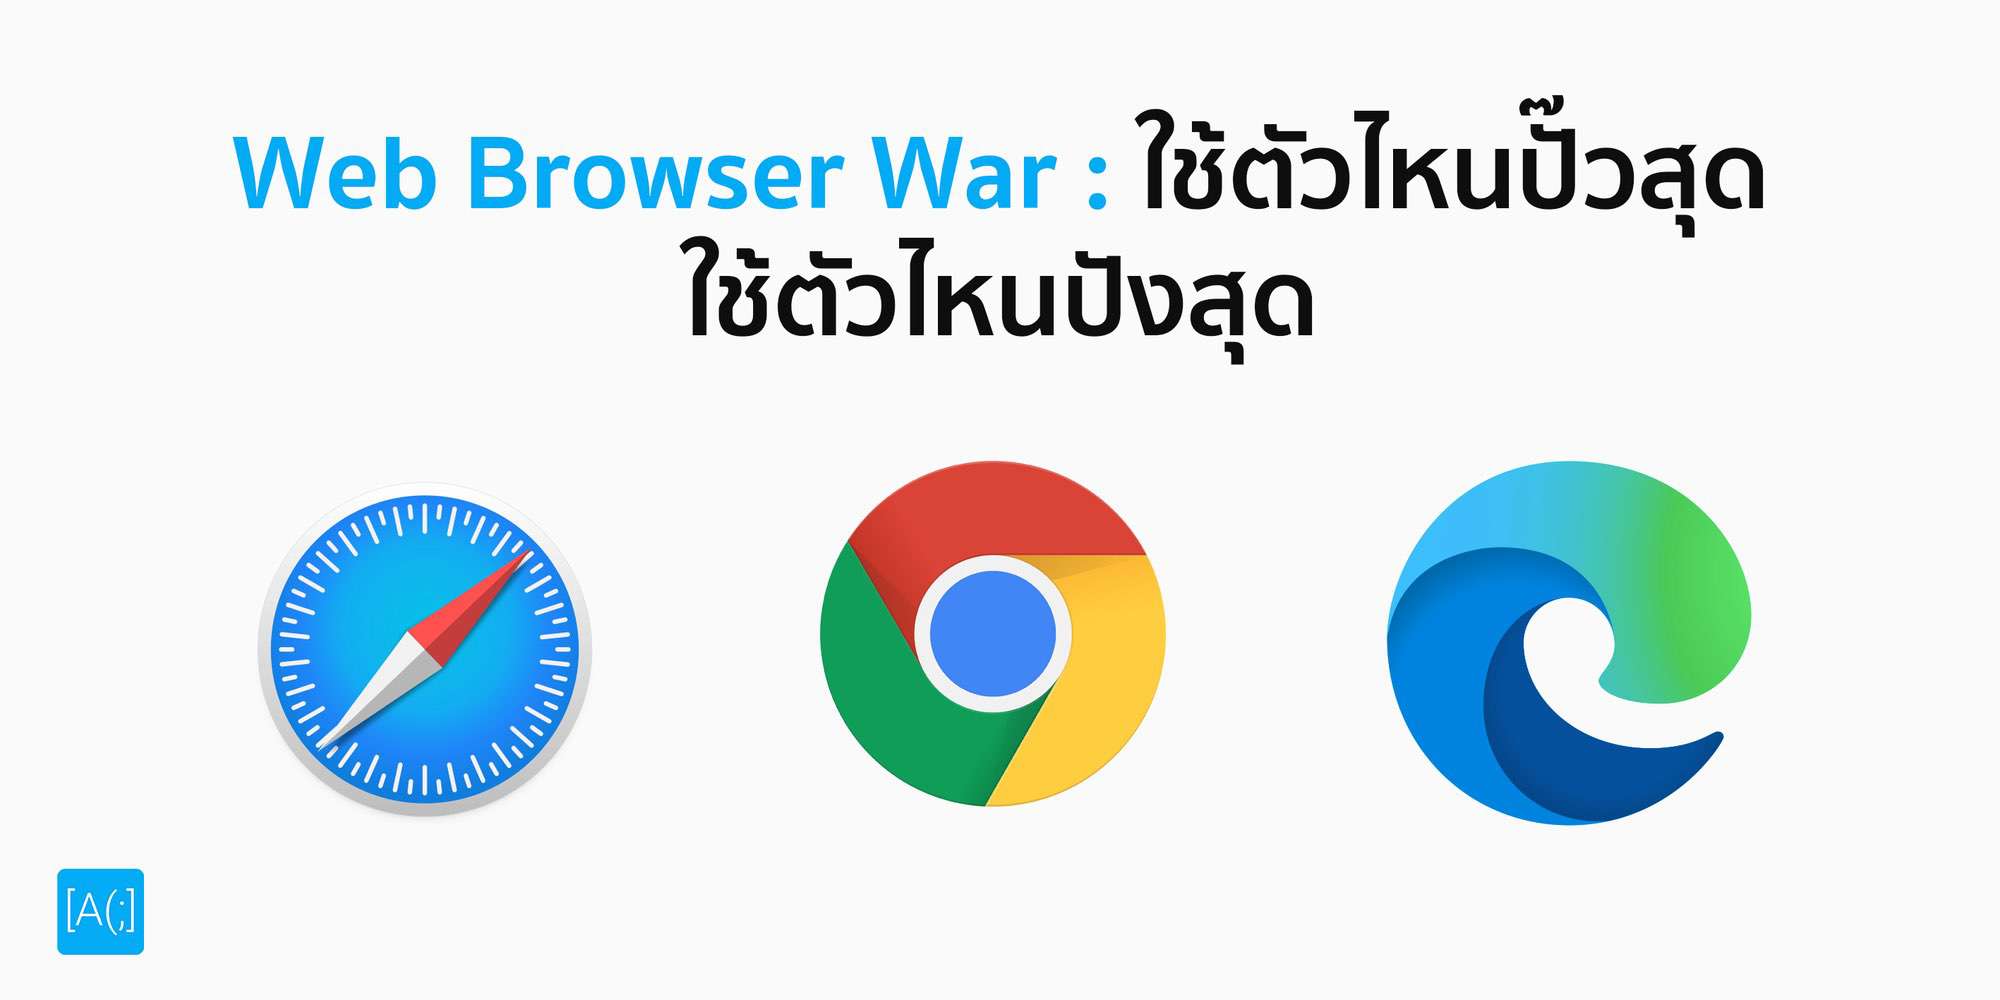 Web Browser War ใช้ตัวไหนปั๊วสุด ใช้ตัวไหนปังสุด